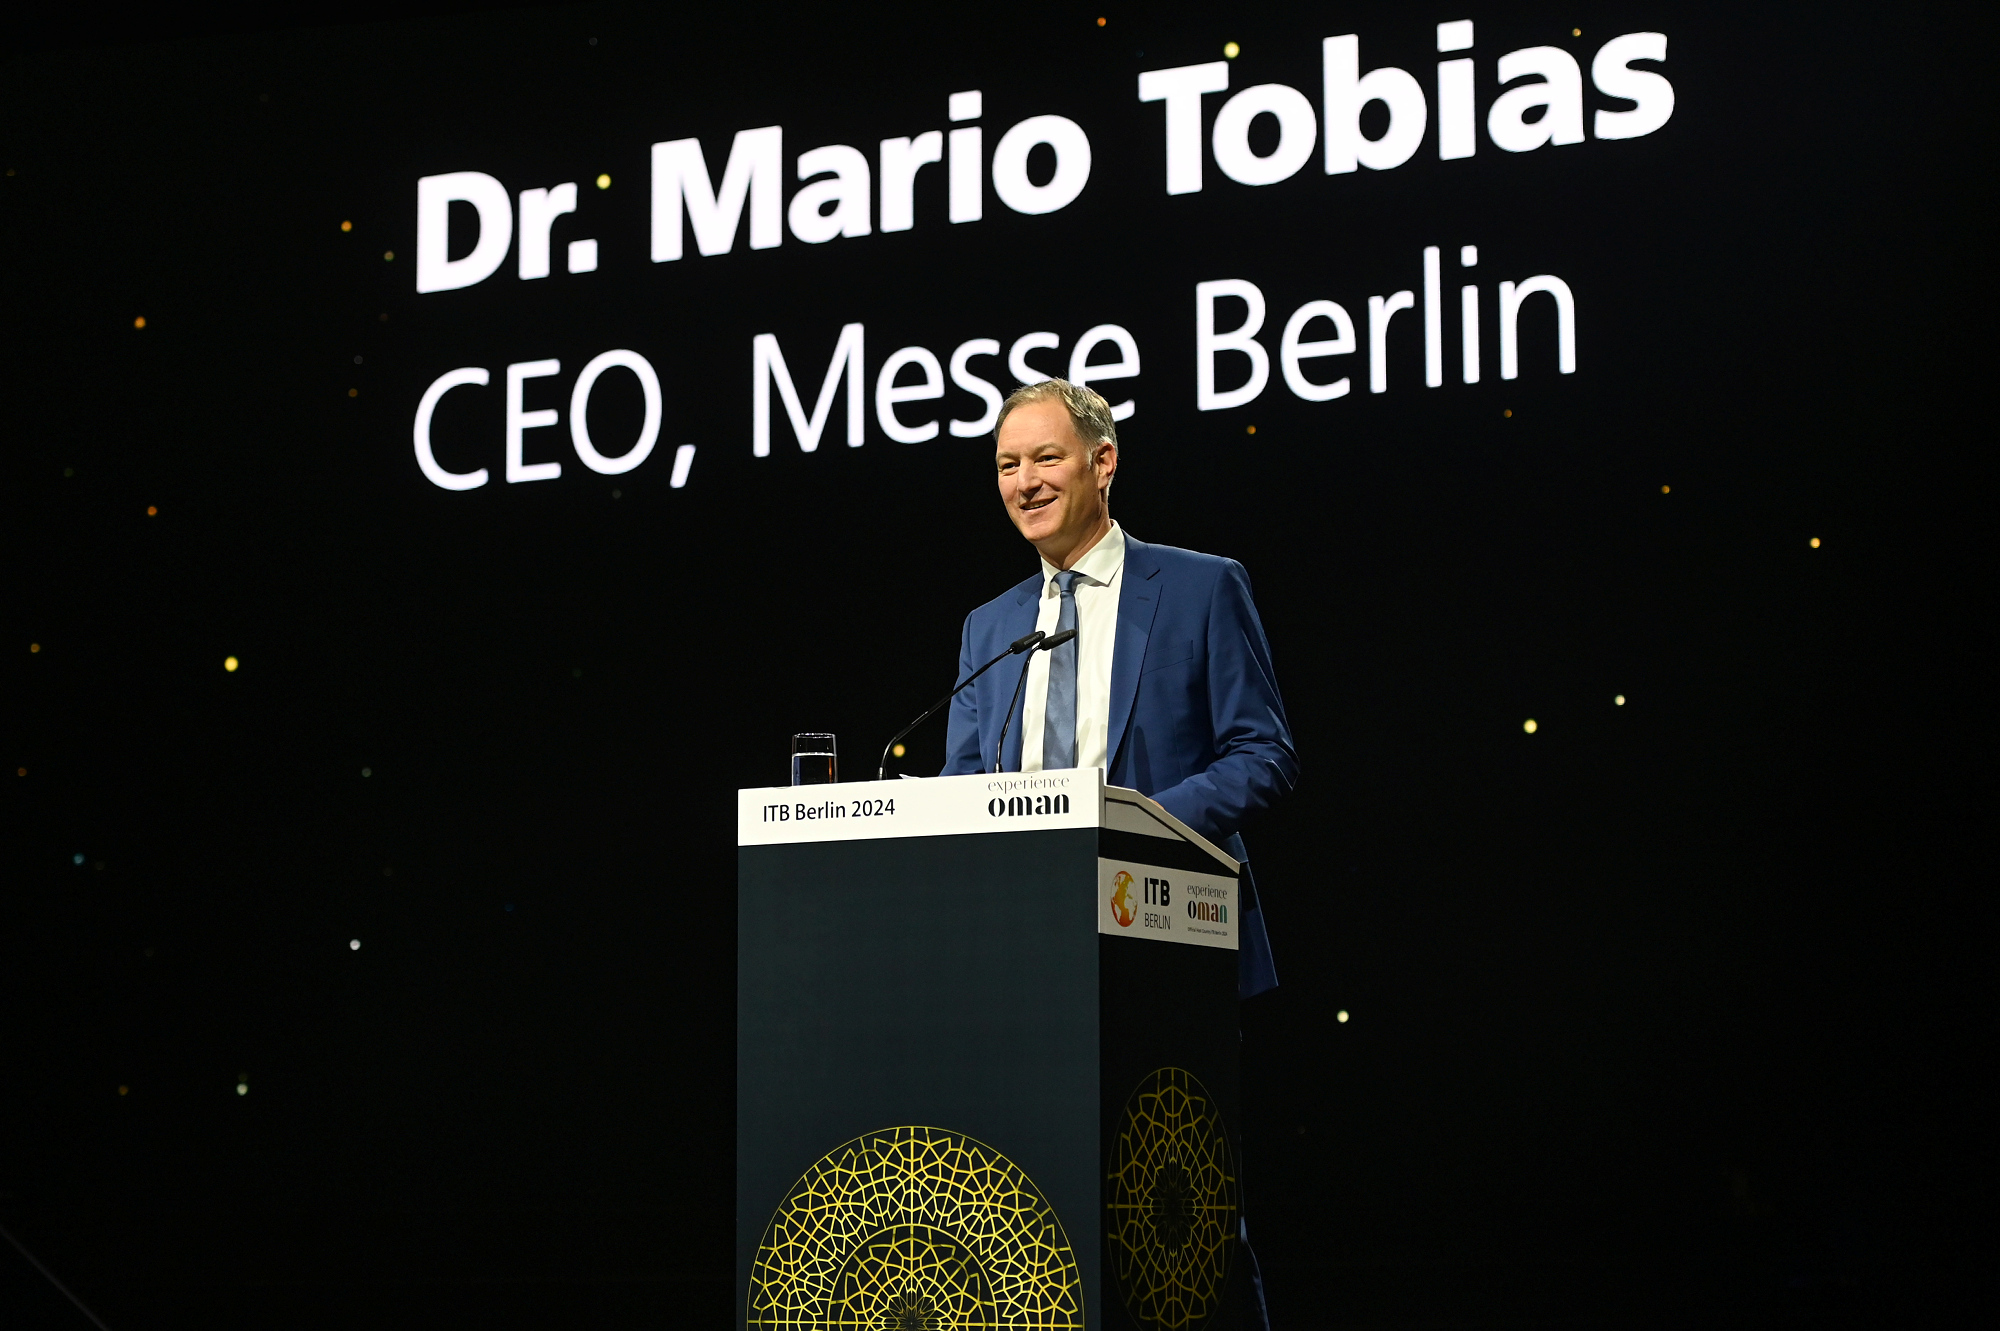 Dr Mario Tobias